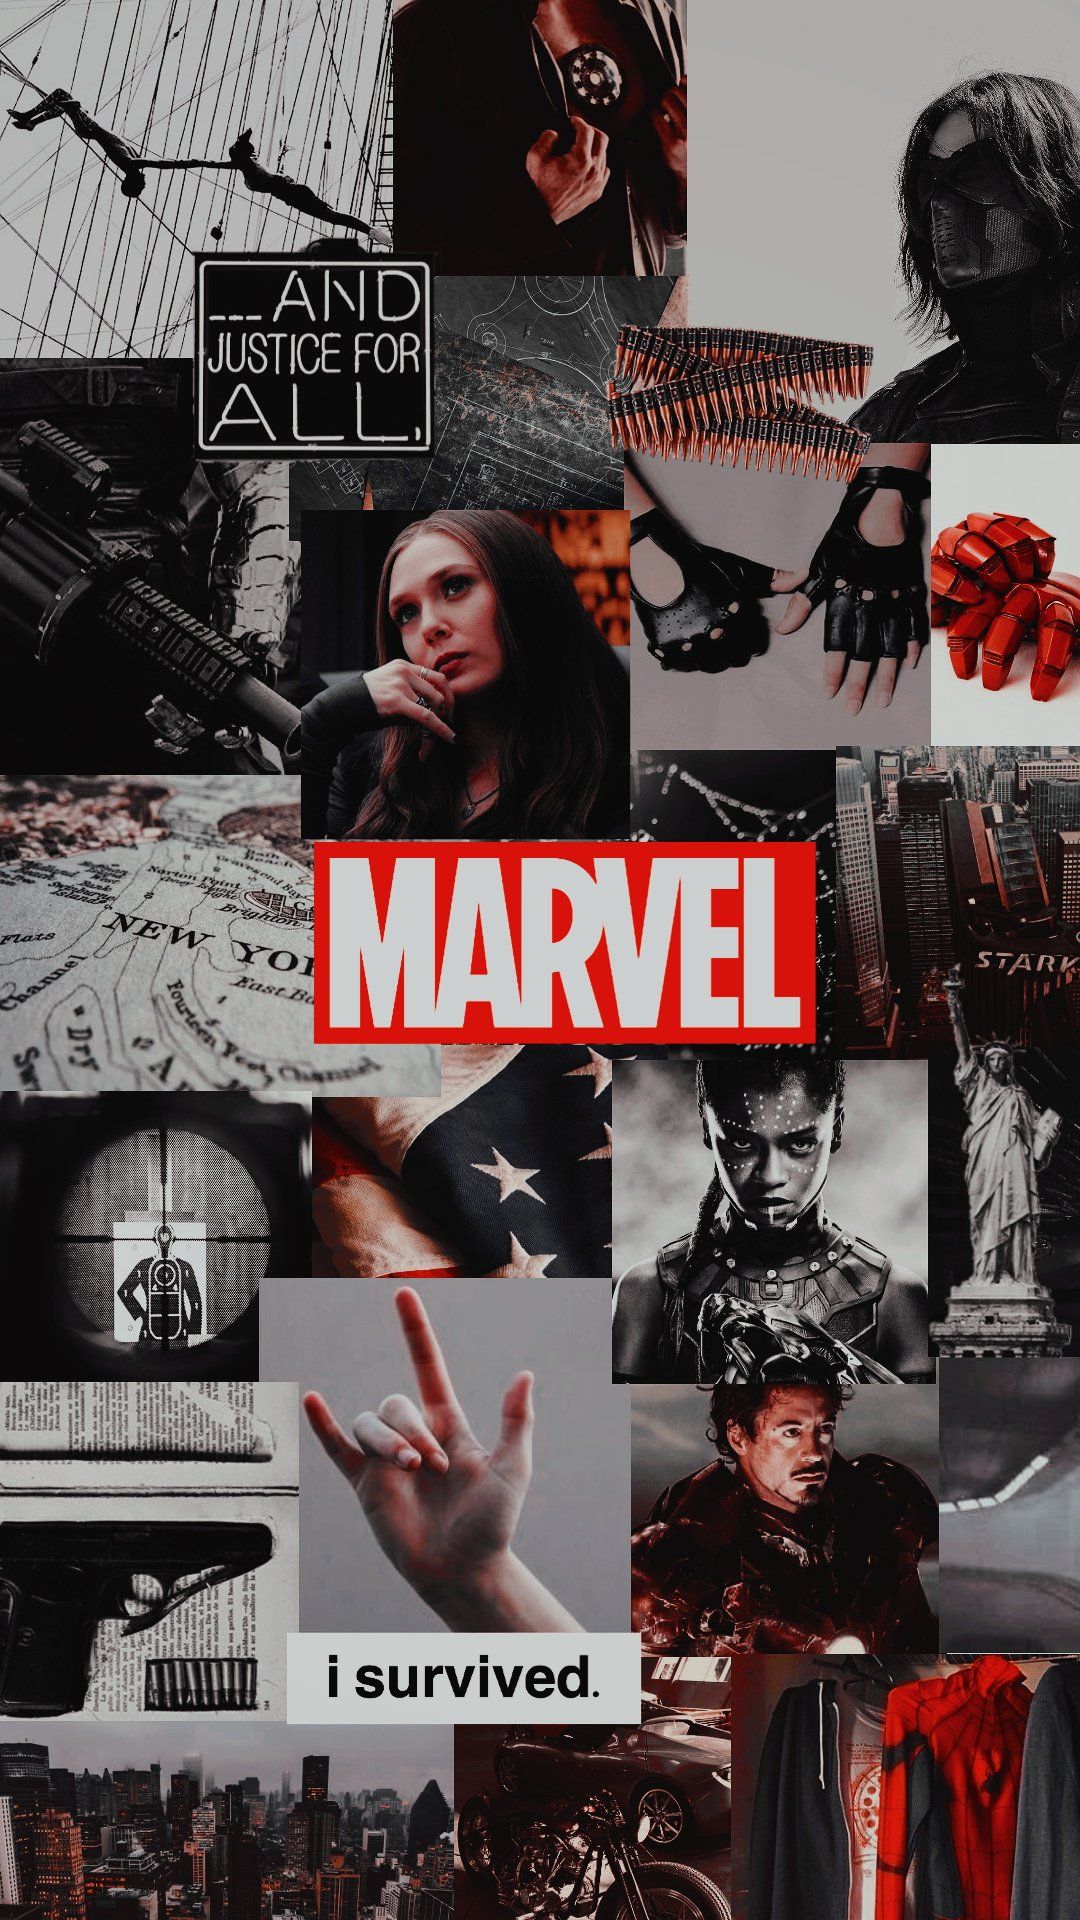 Aesthetic marvel background for phone and desktop! - Marvel